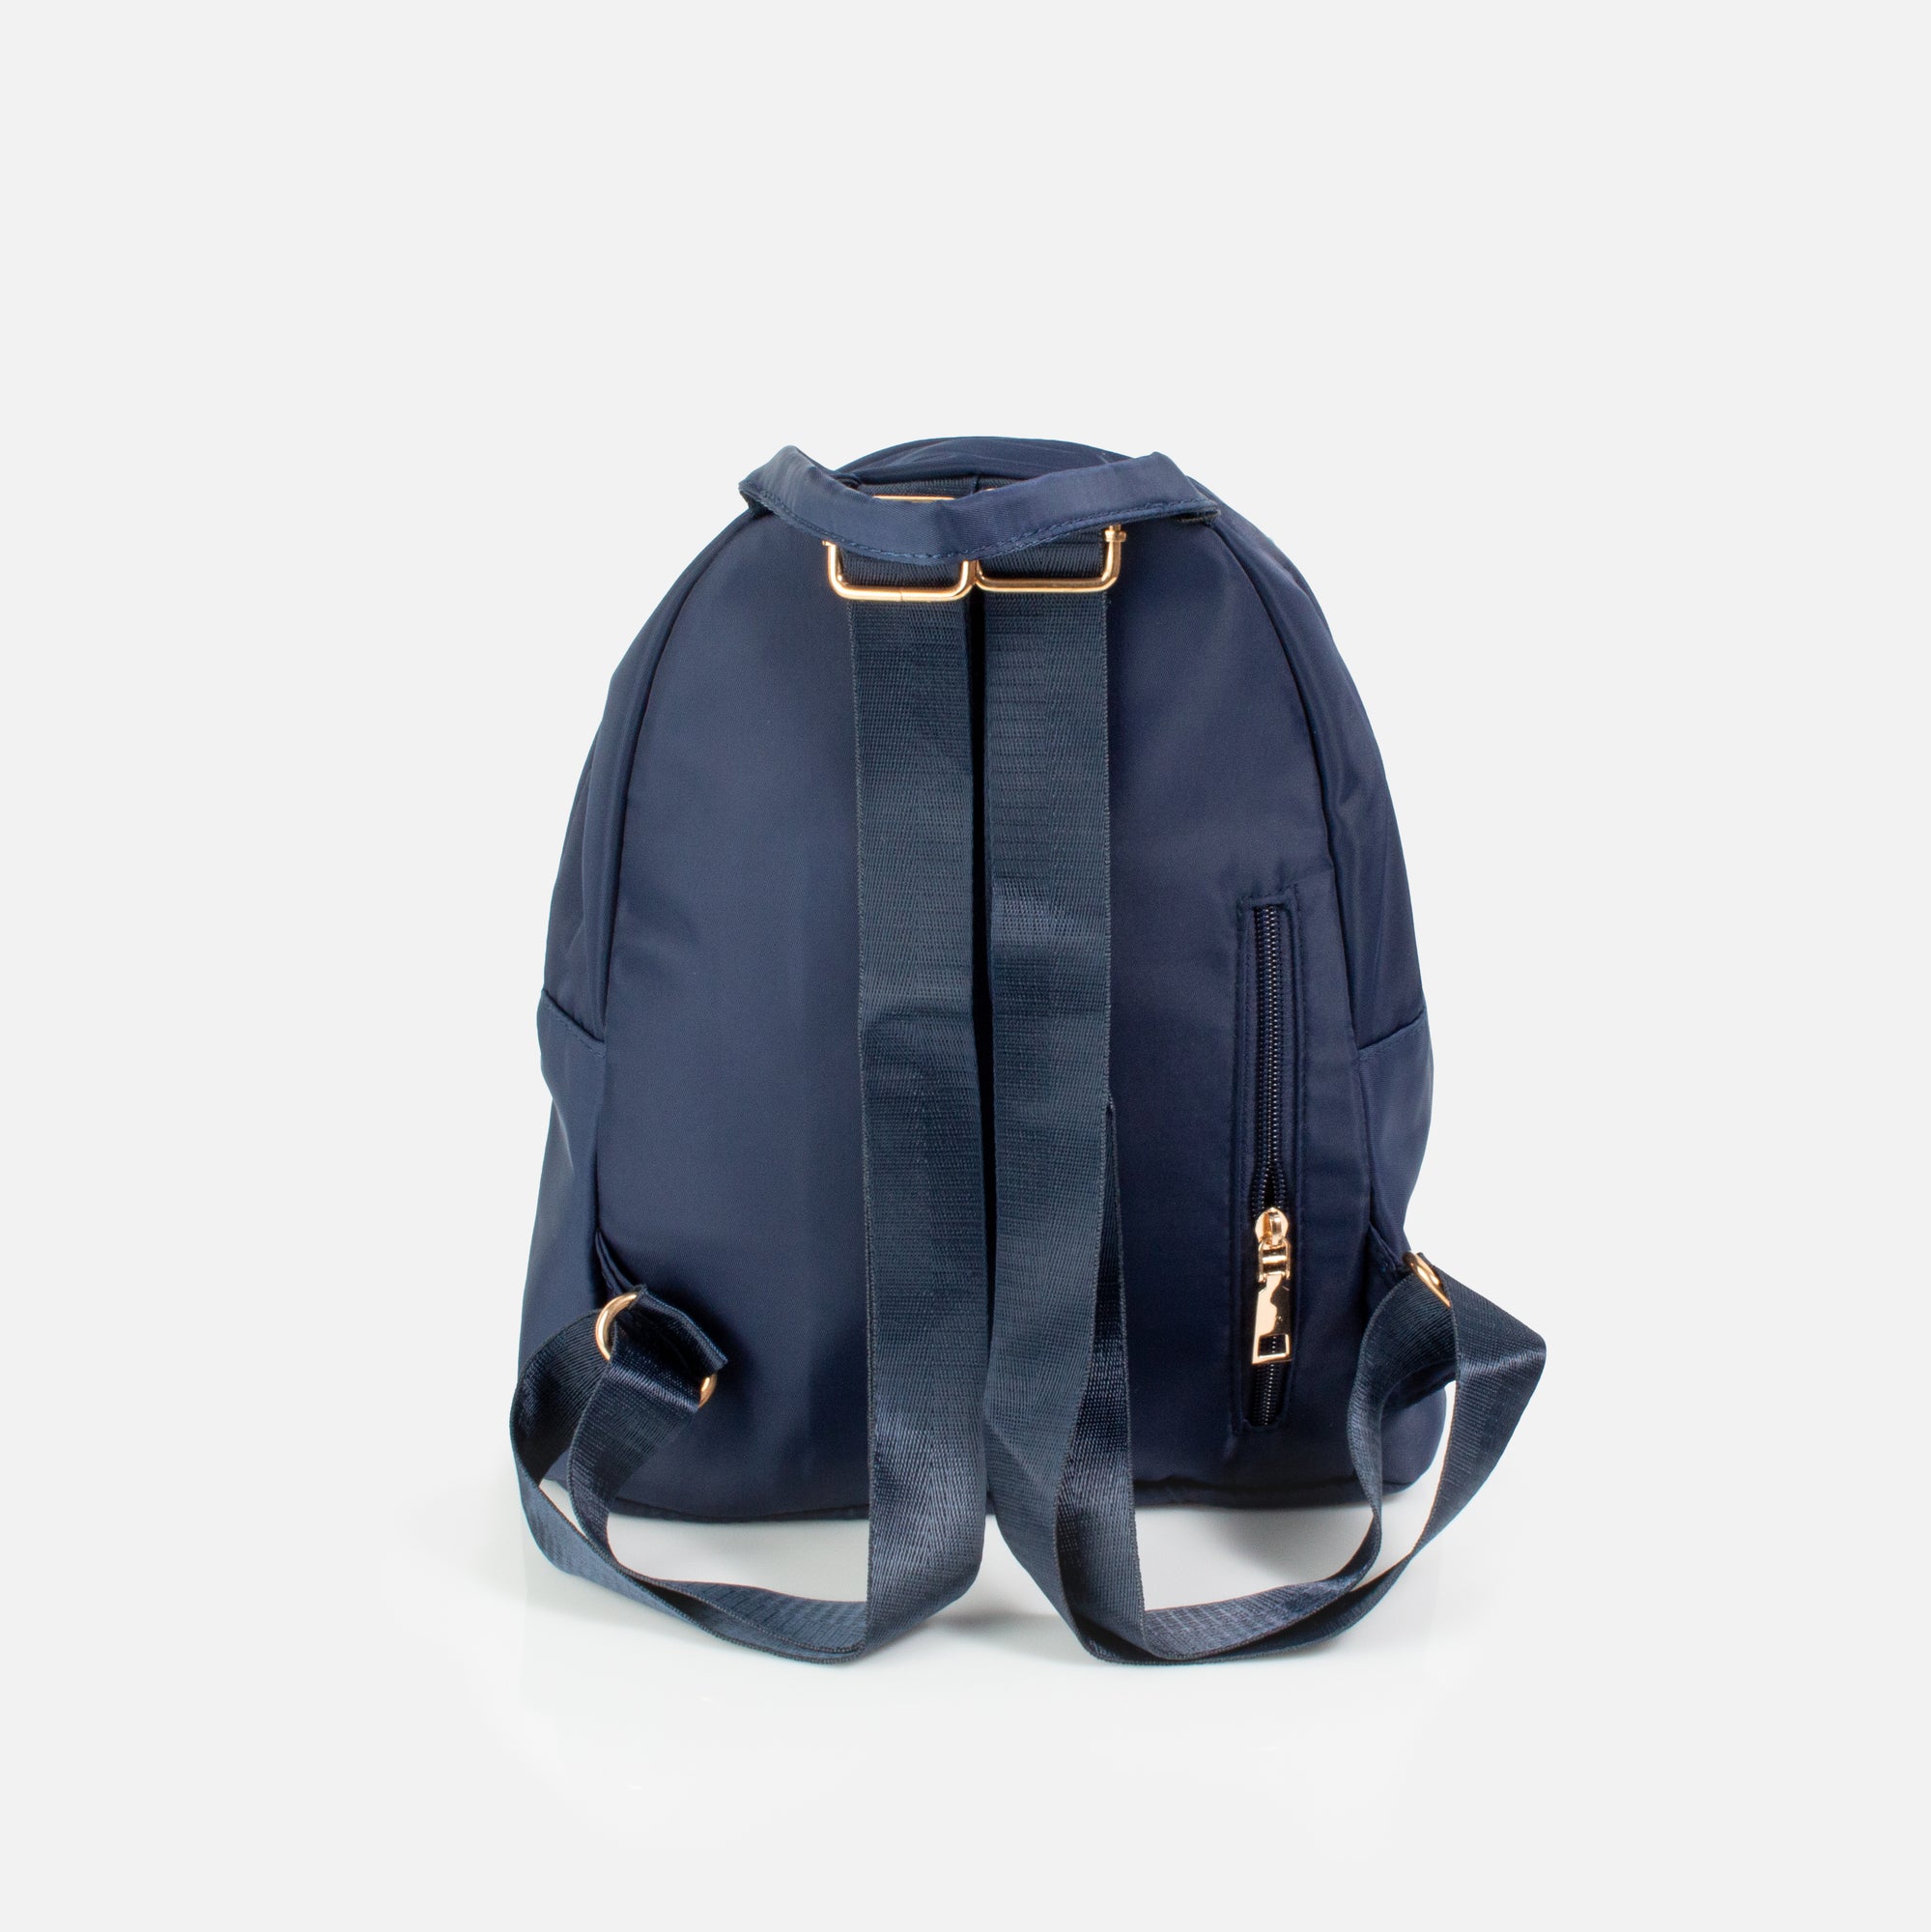 Navy backpack